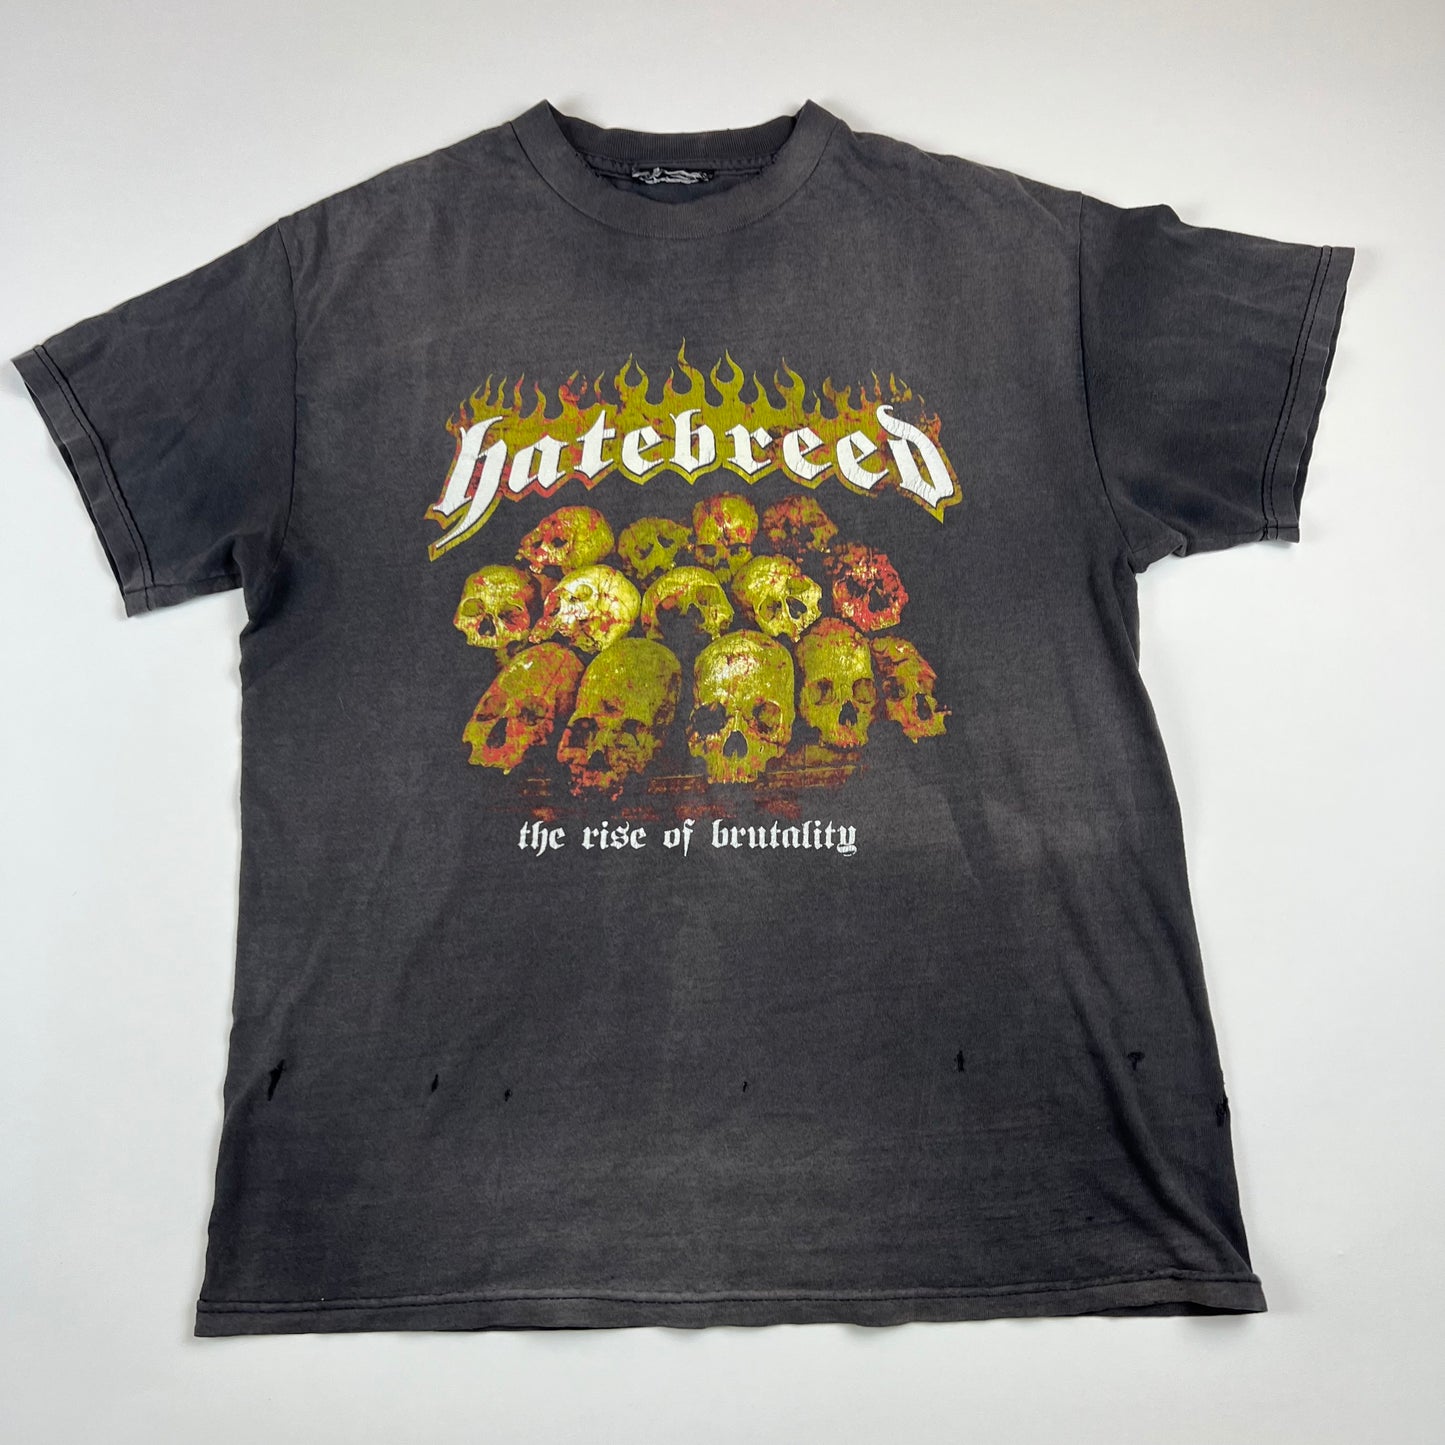 Vintage 2003 Hatebreed shirt Medium The Rise Of Brutality